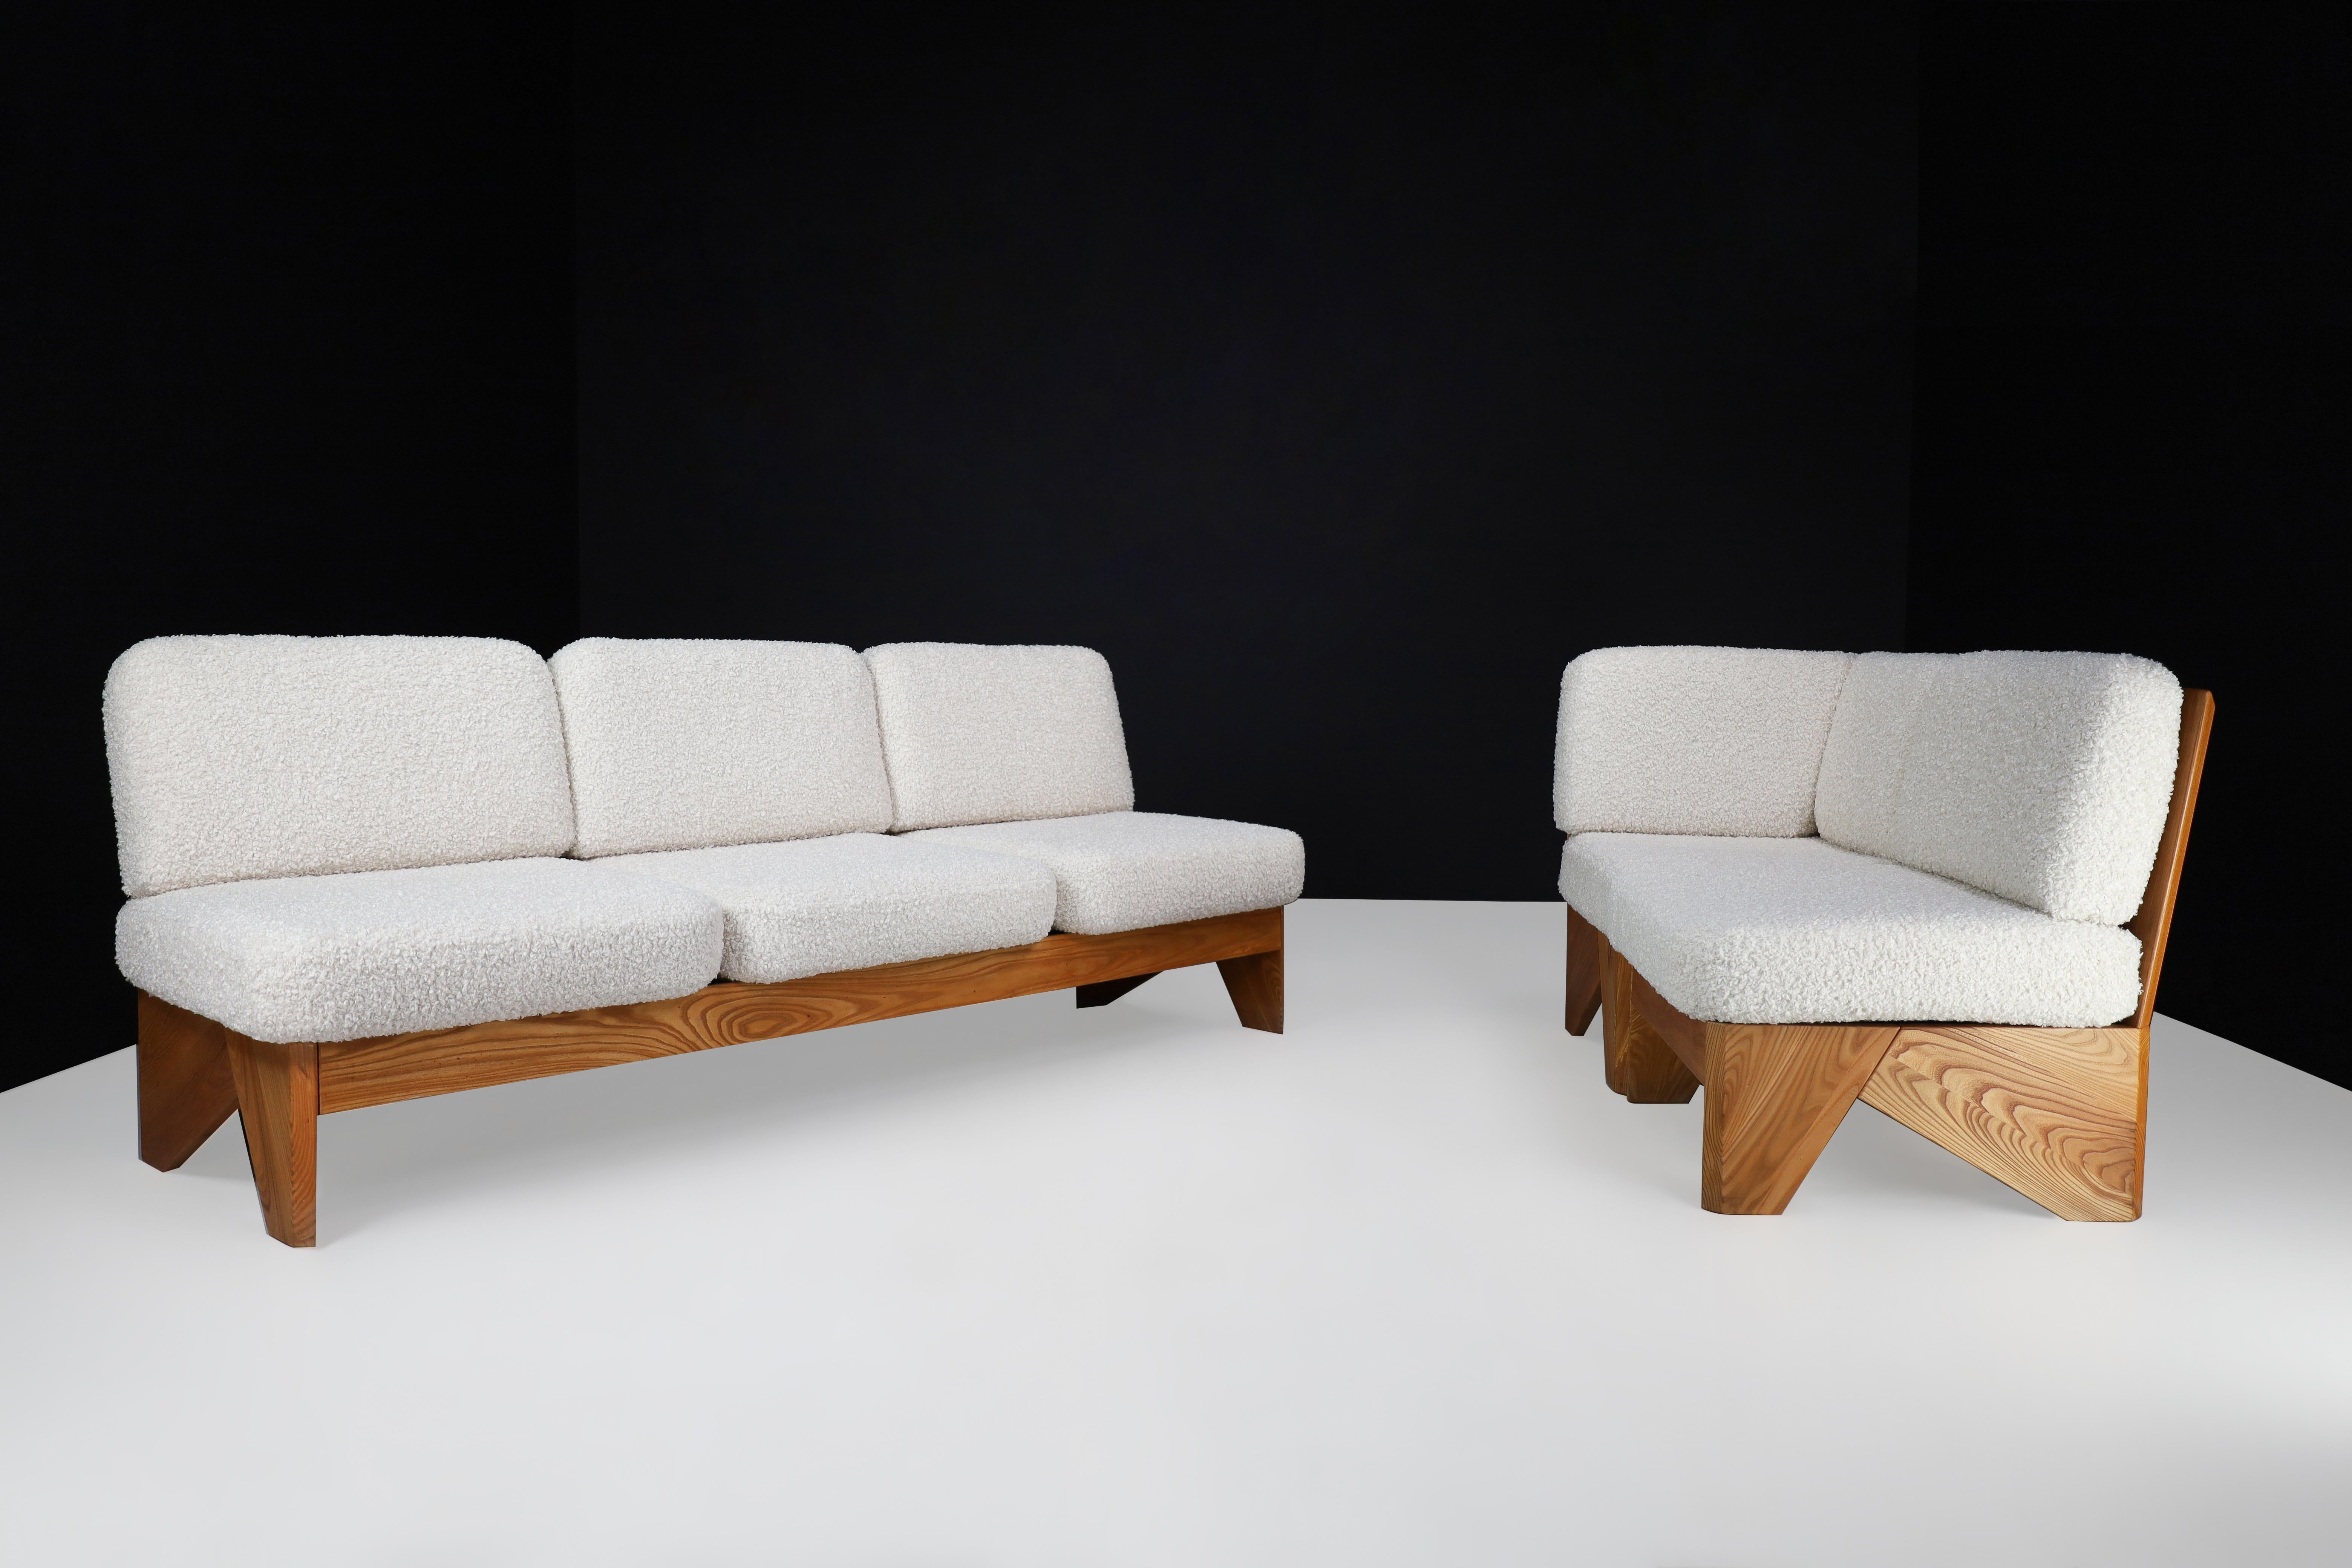 Maison Regain Style Sofa/Living Room Set in Elm and Bouclé Fabric, France 1970s  For Sale 3